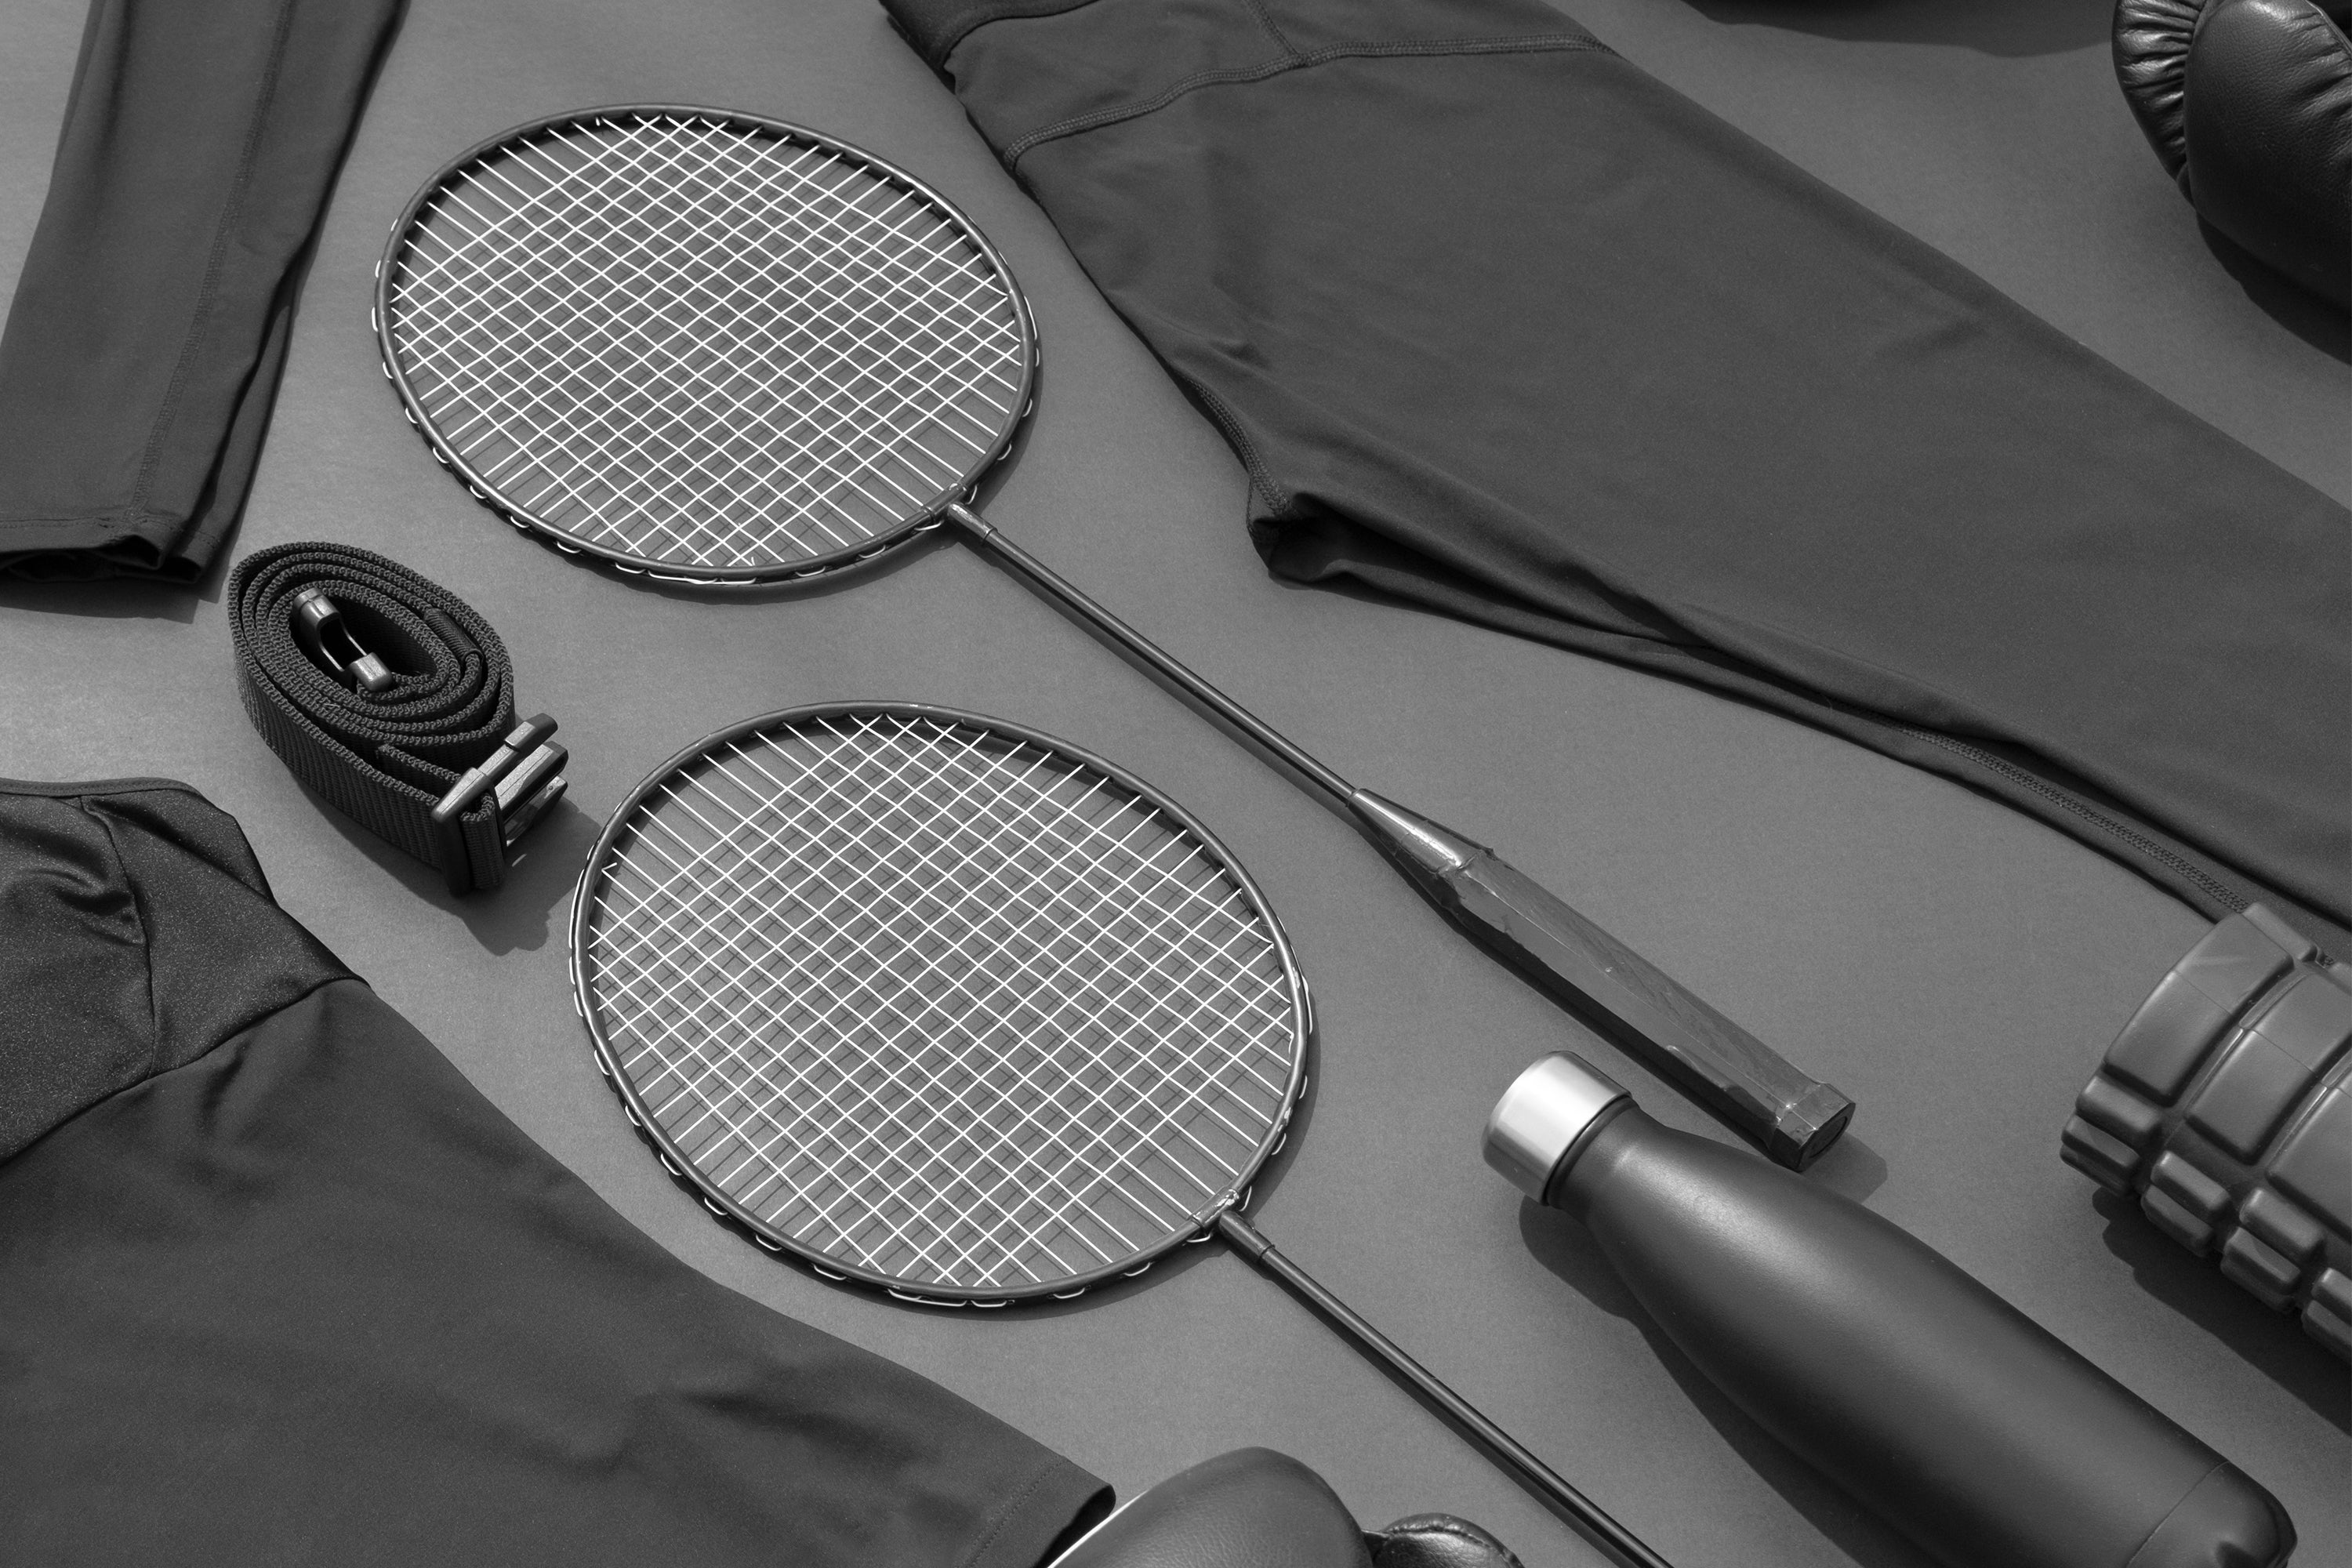 Carbon Fiber Badminton Racket: Ideal for Beginners